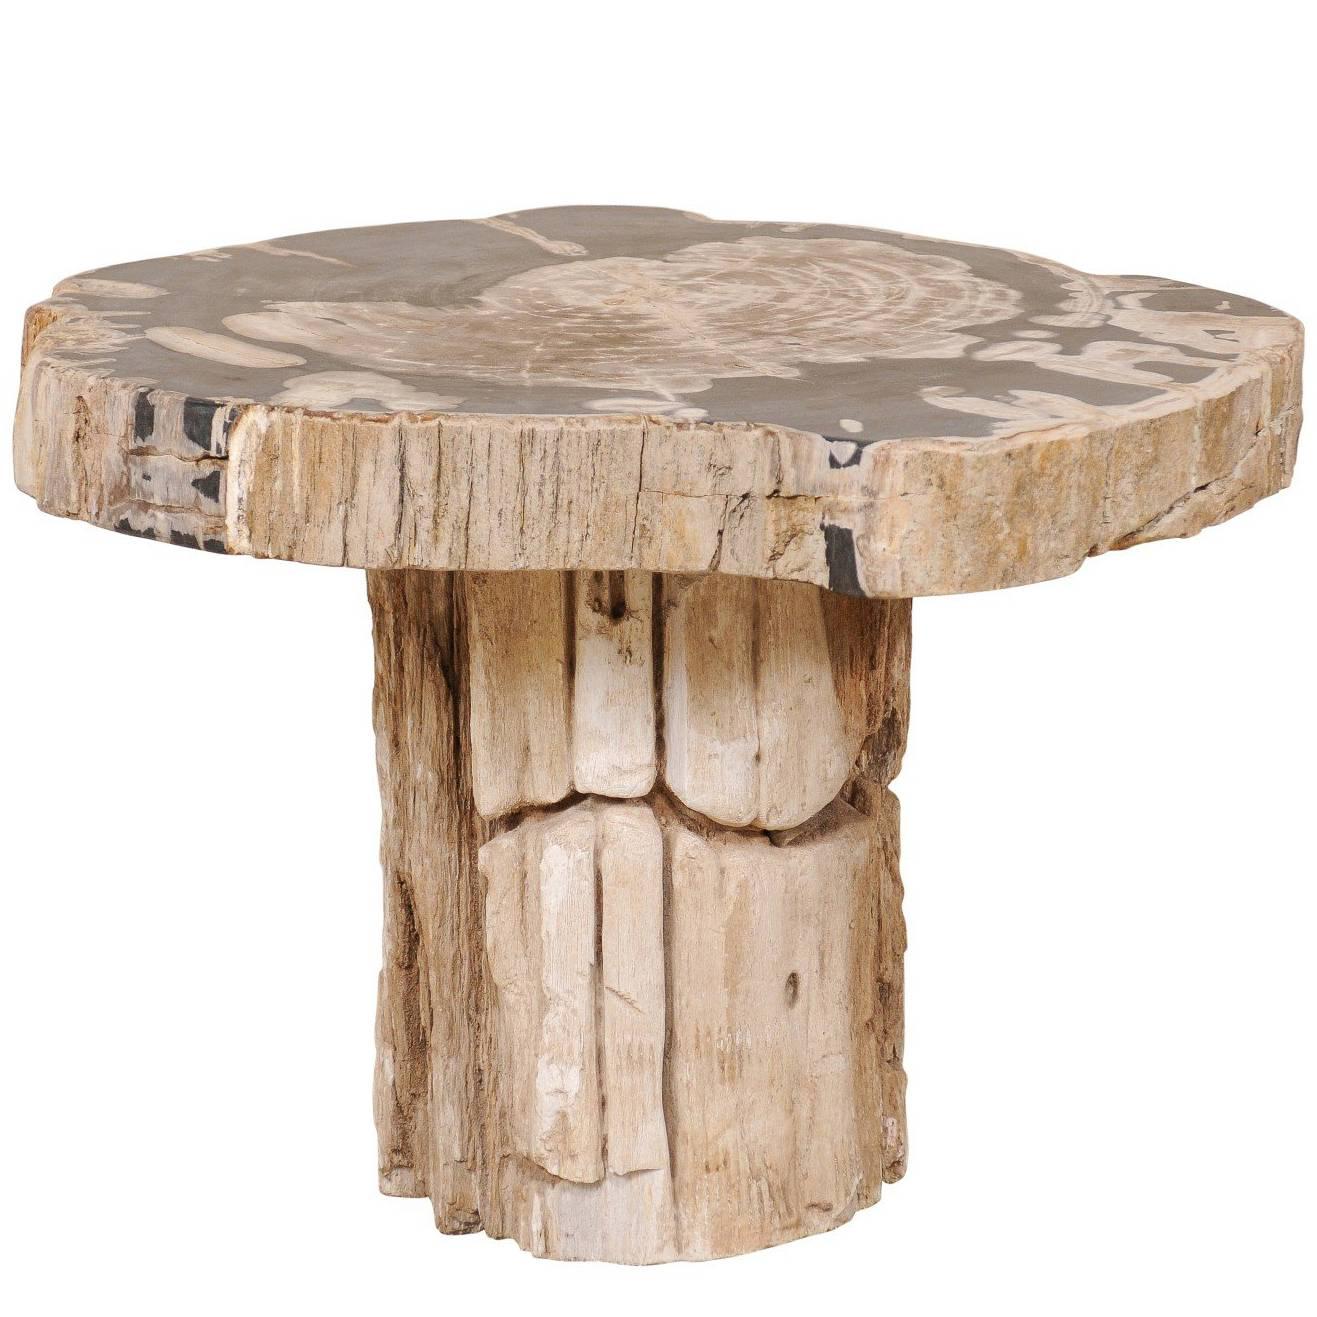 Petrified Wood Pedestal Coffee Table in Cream, Beige and Black Hues